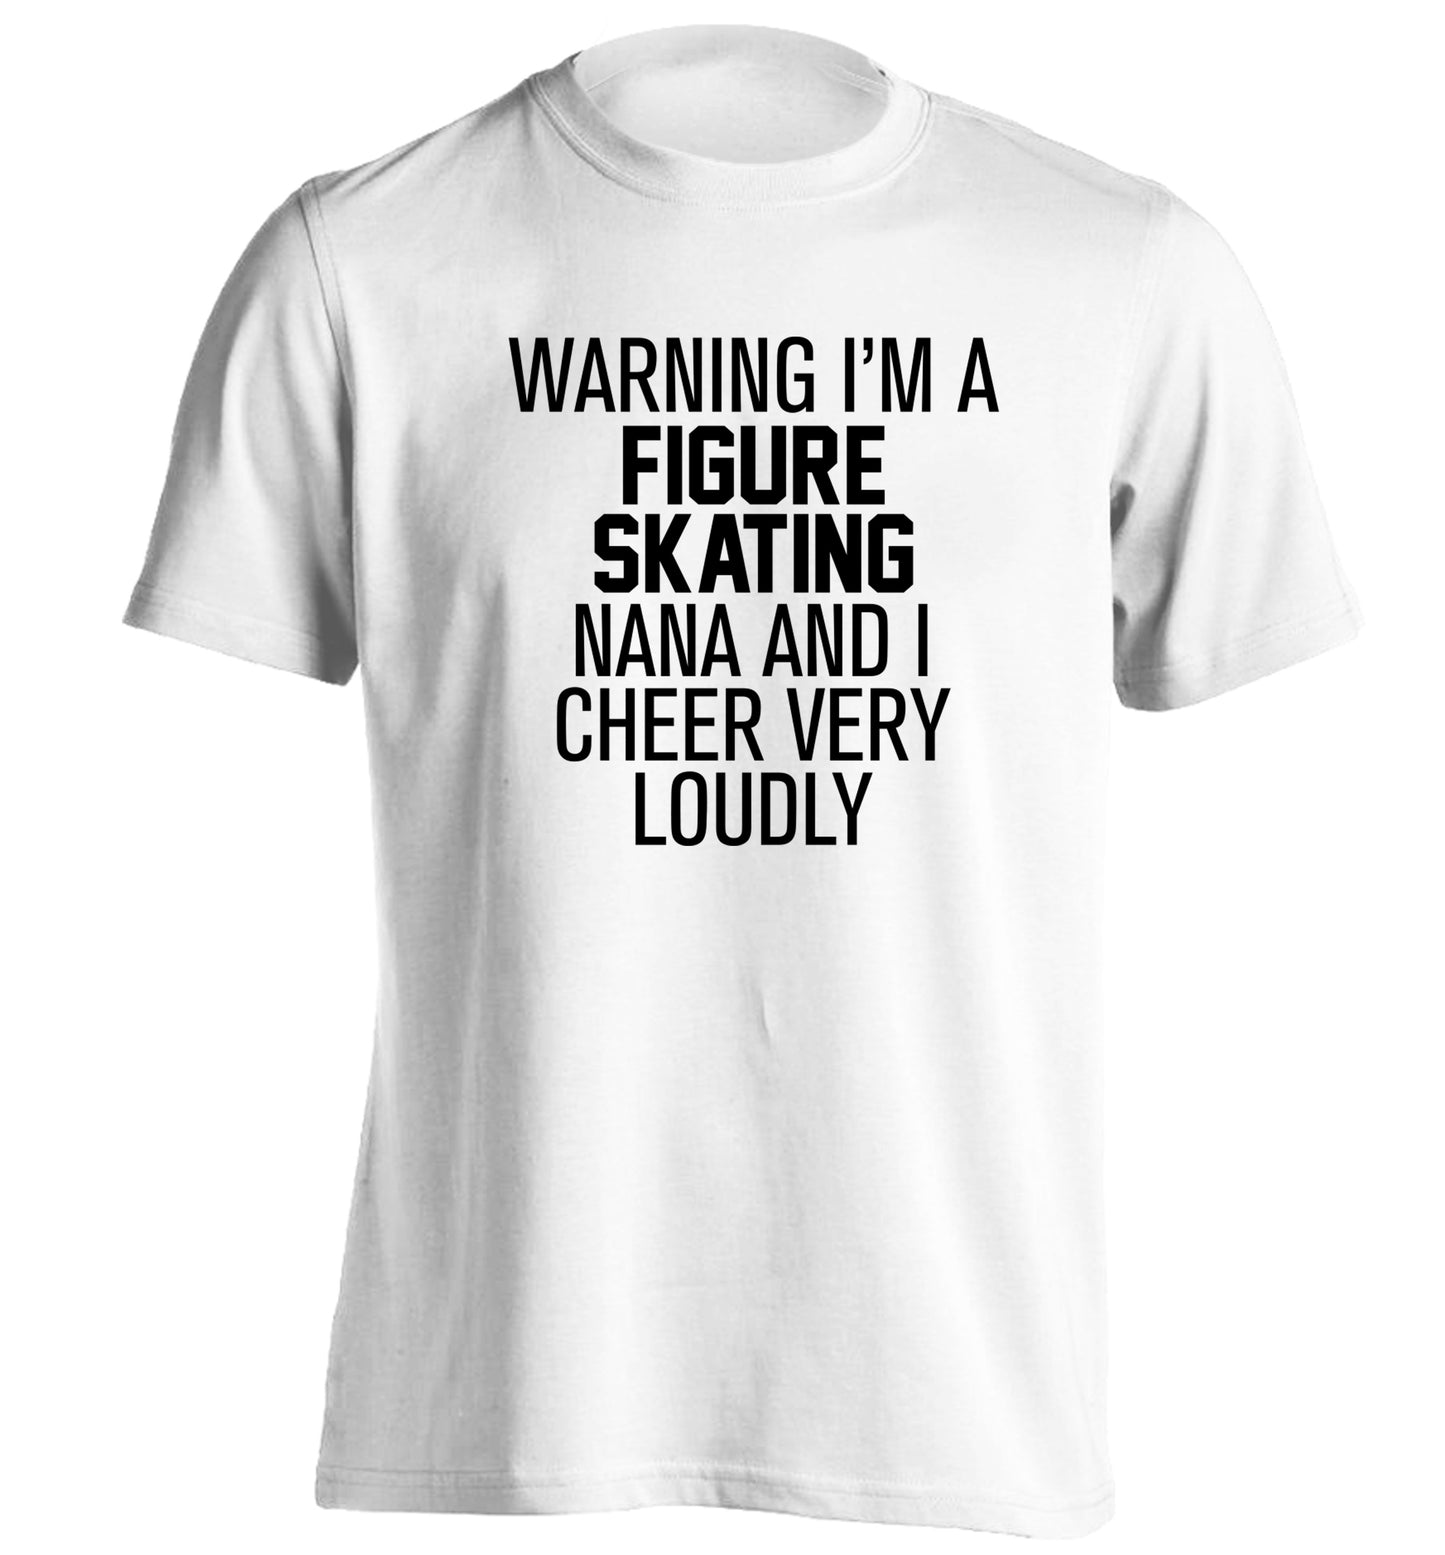 Warning I'm a figure skating nana and I cheer very loudly adults unisexwhite Tshirt 2XL